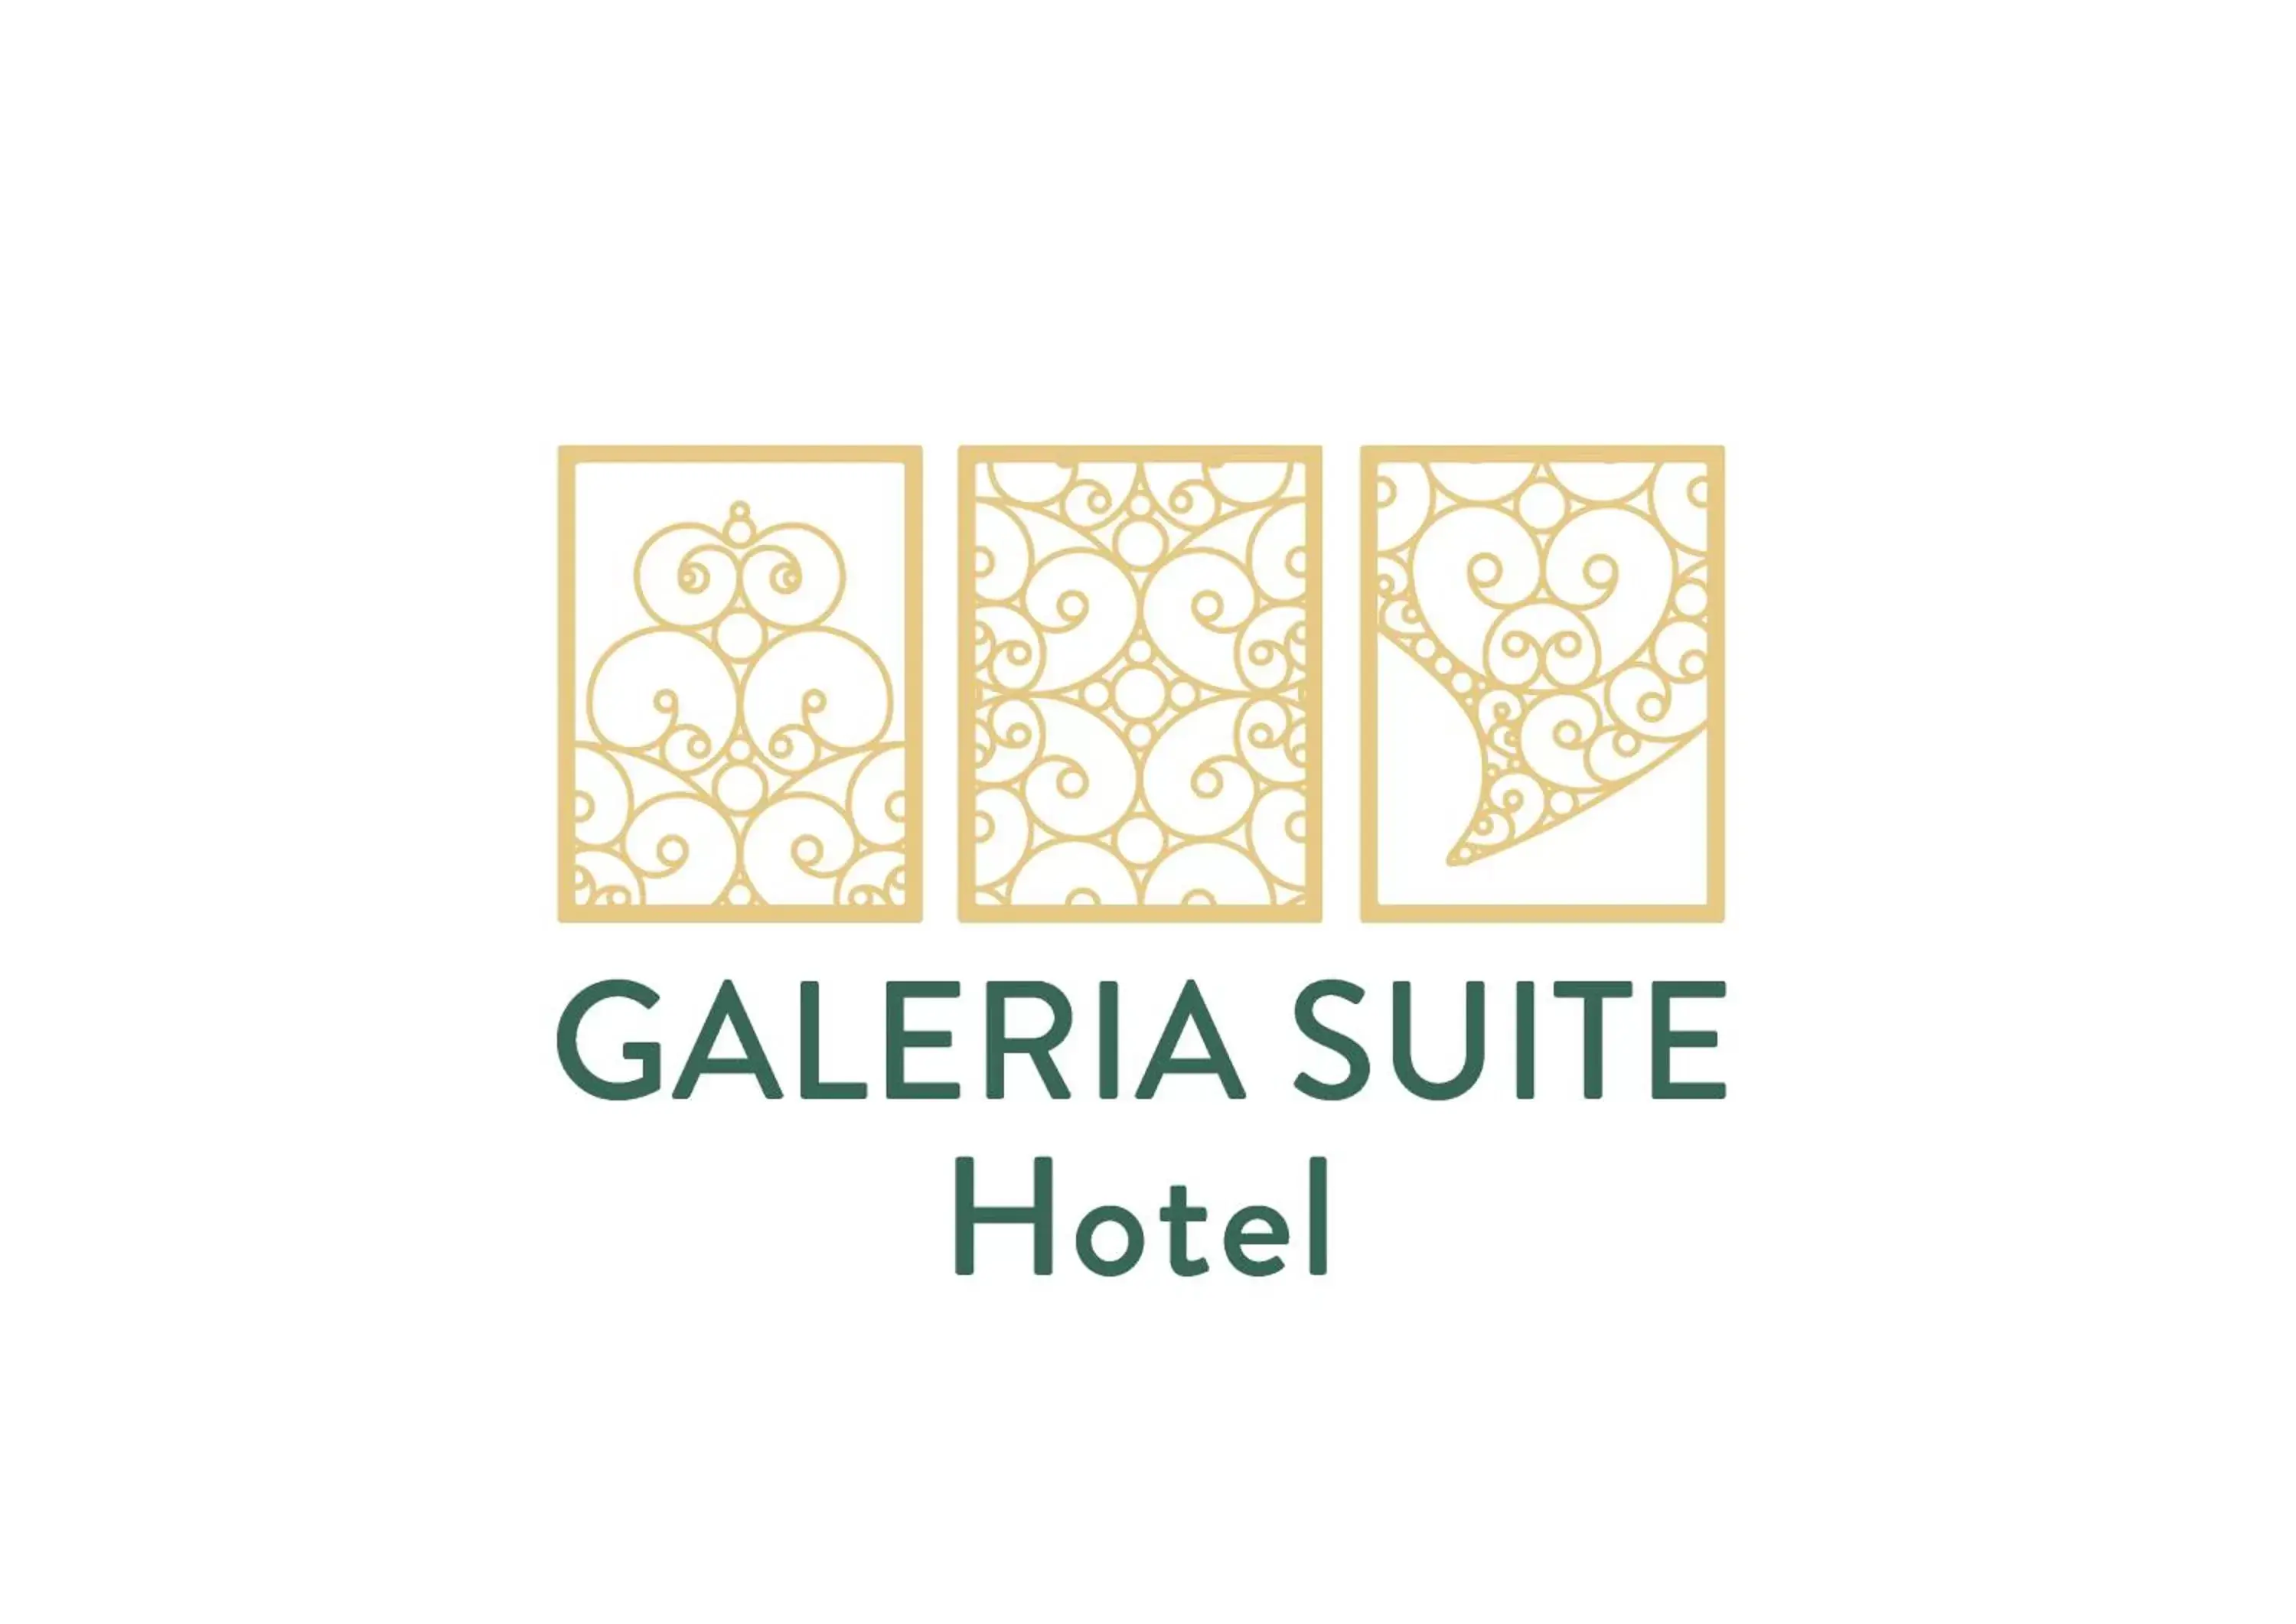 Logo/Certificate/Sign in Galeria Suite Hotel